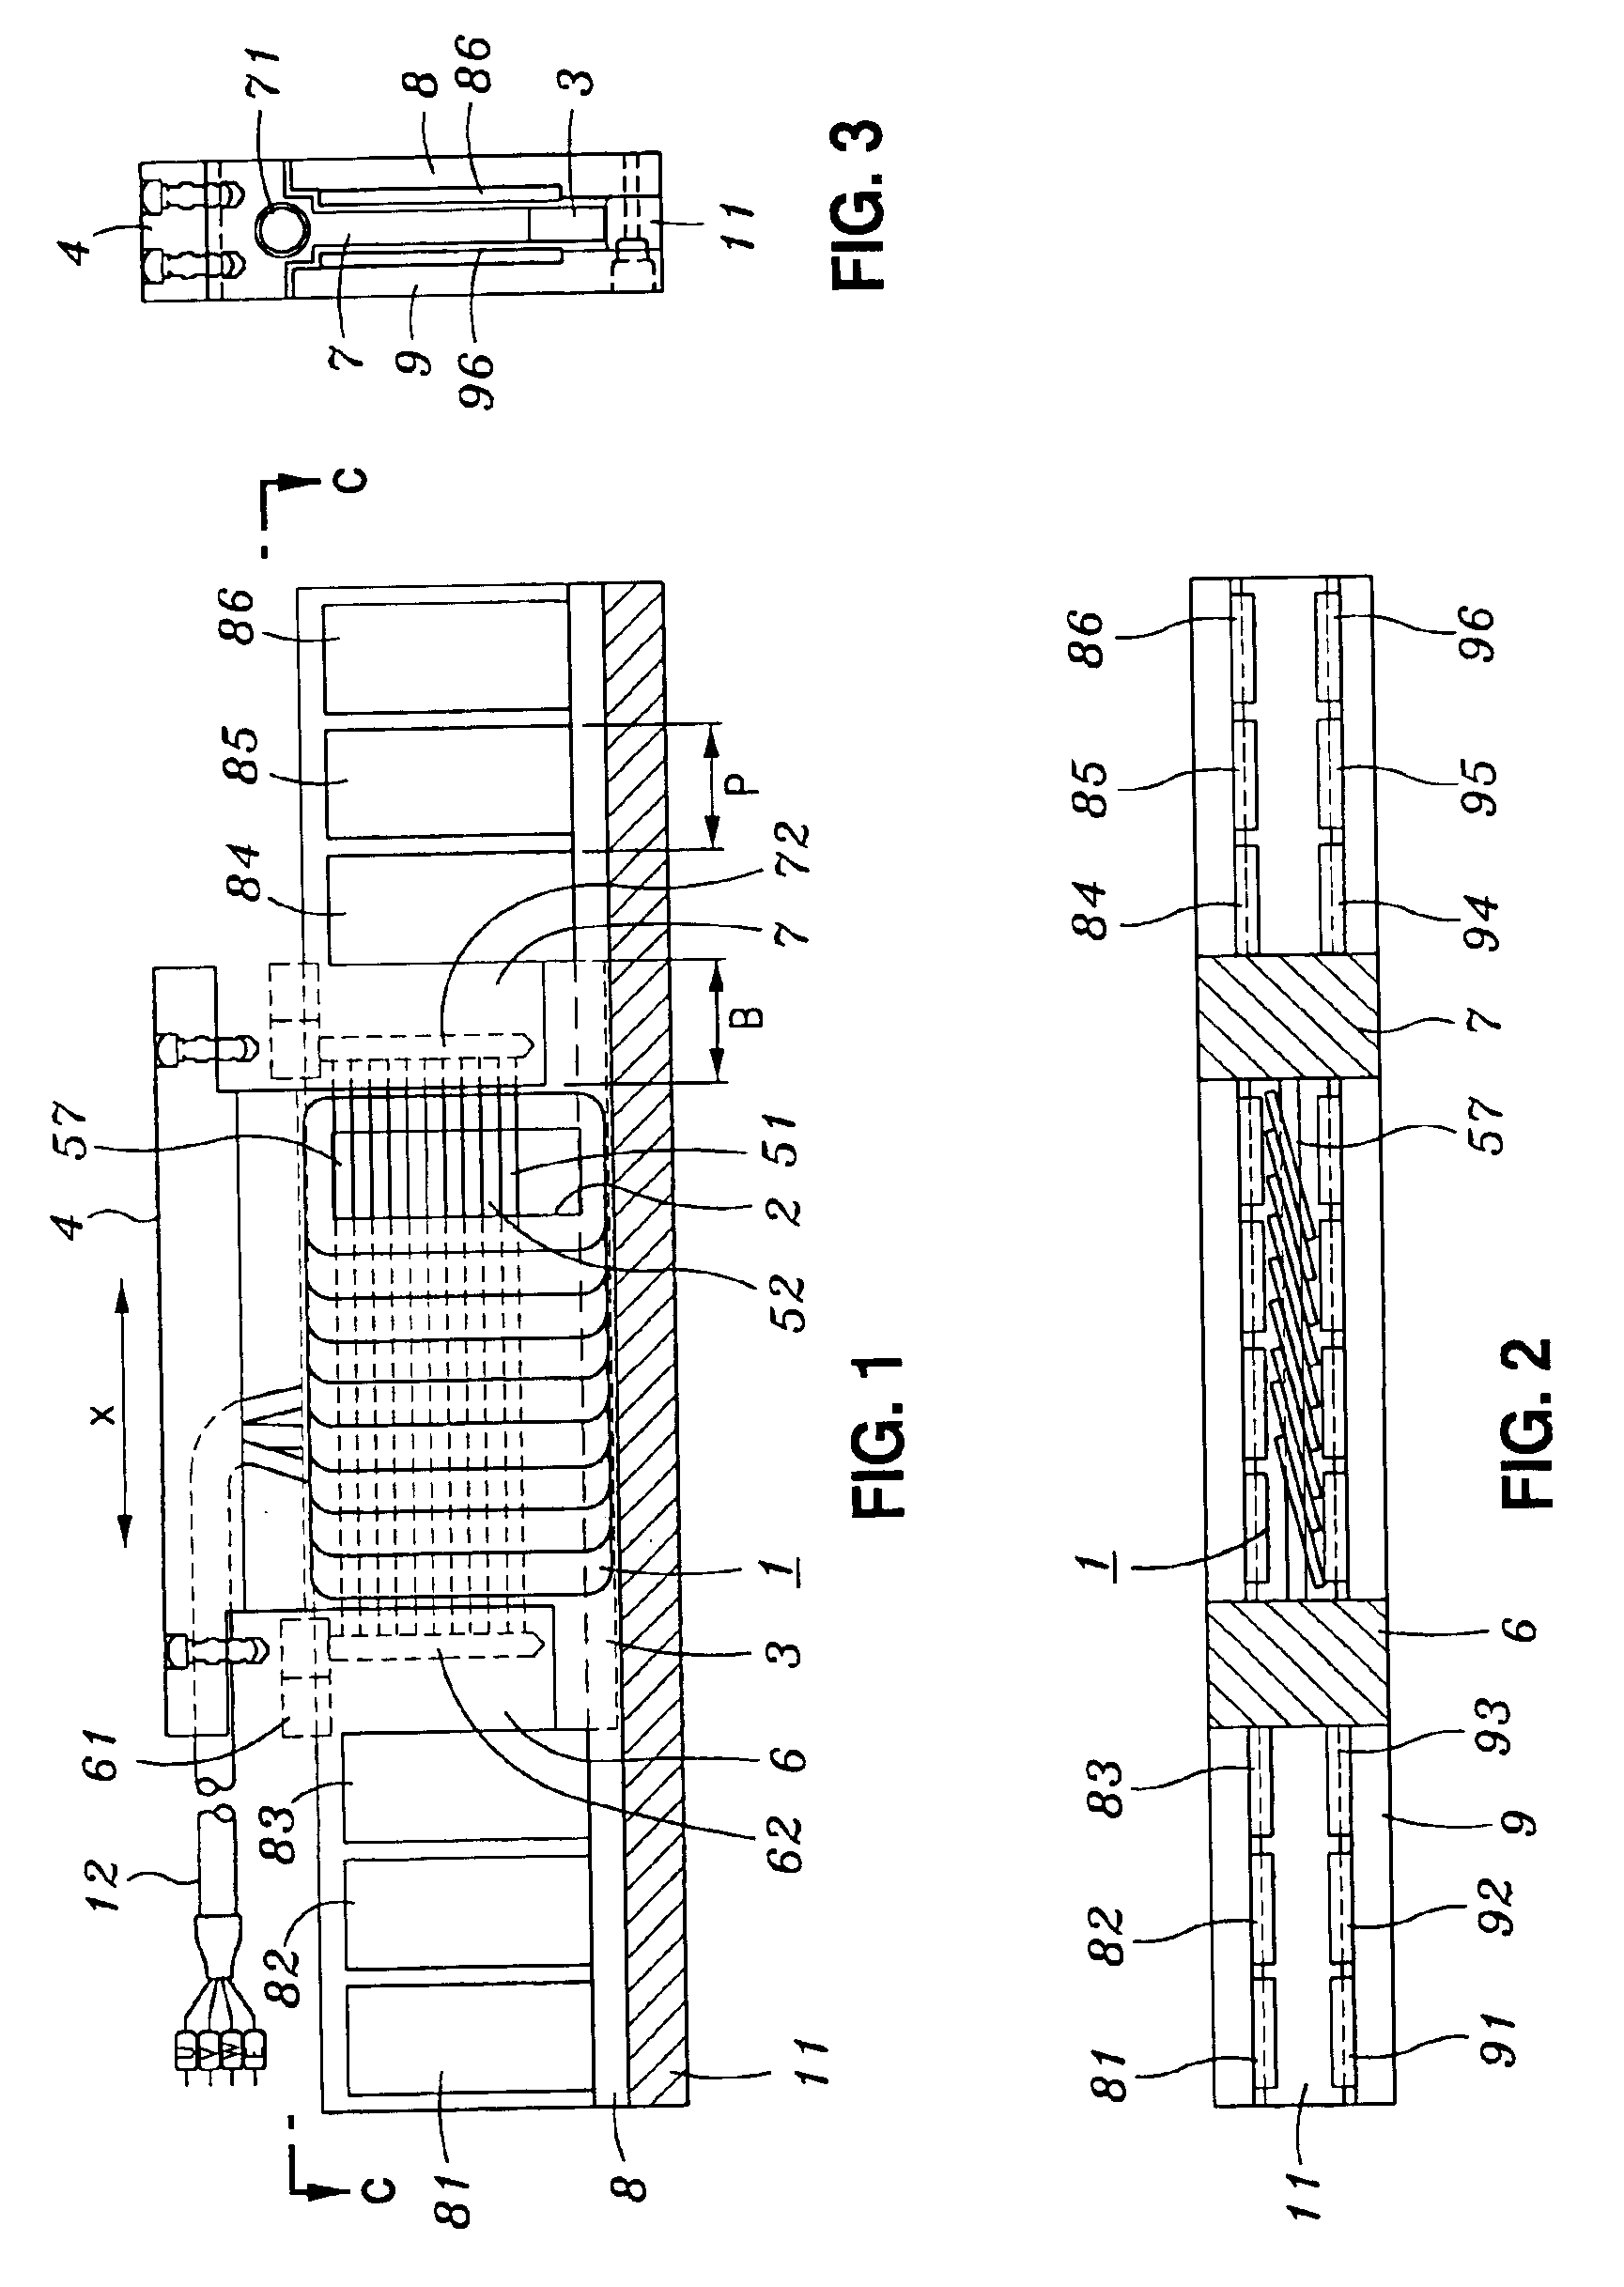 Ironless AC linear motor